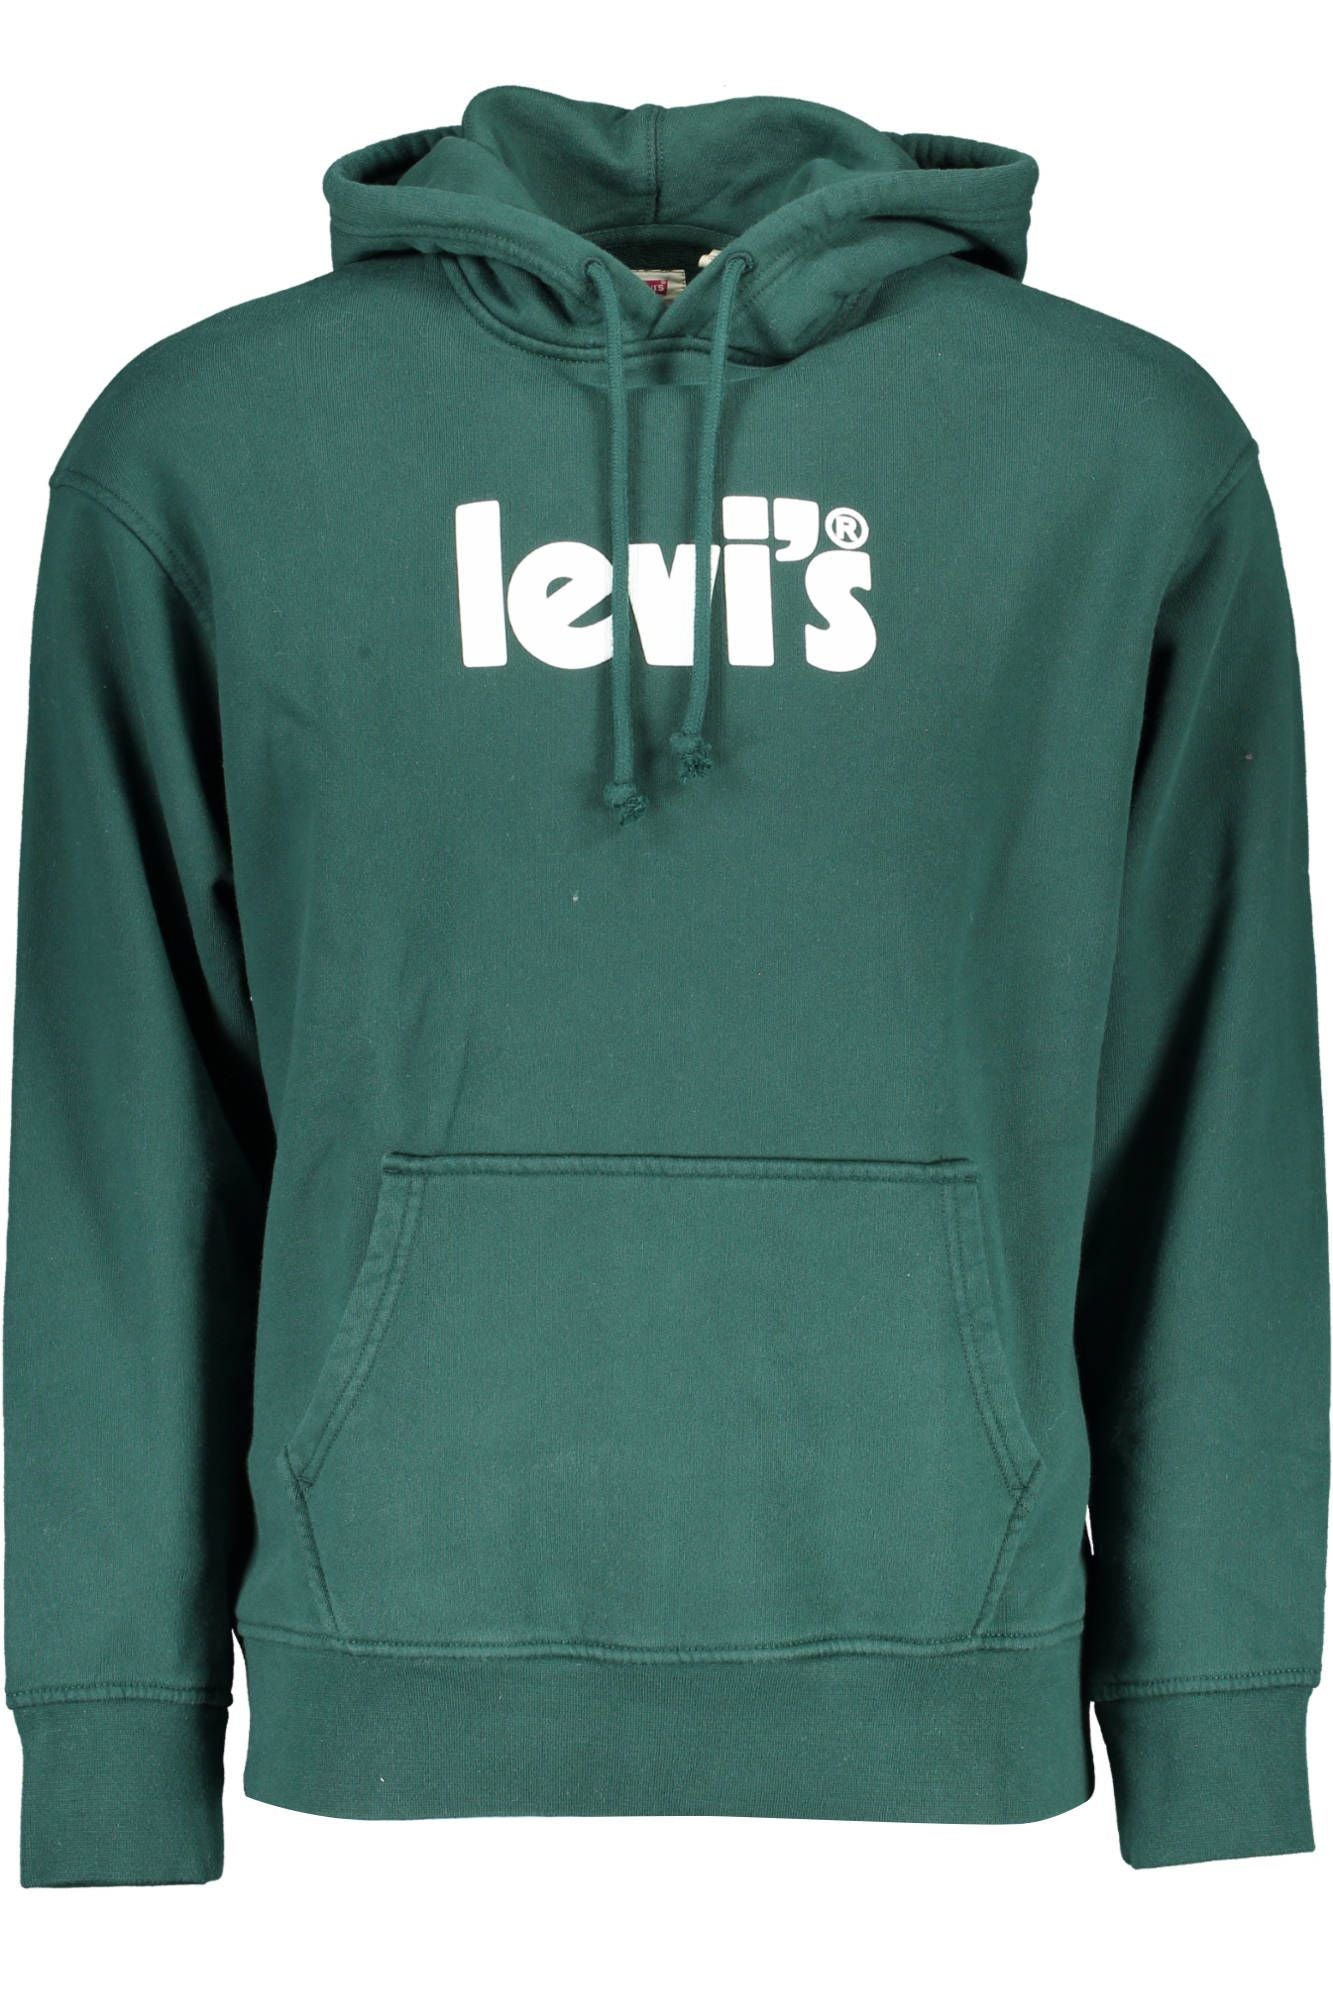 Levi's Green Cotton Sweater